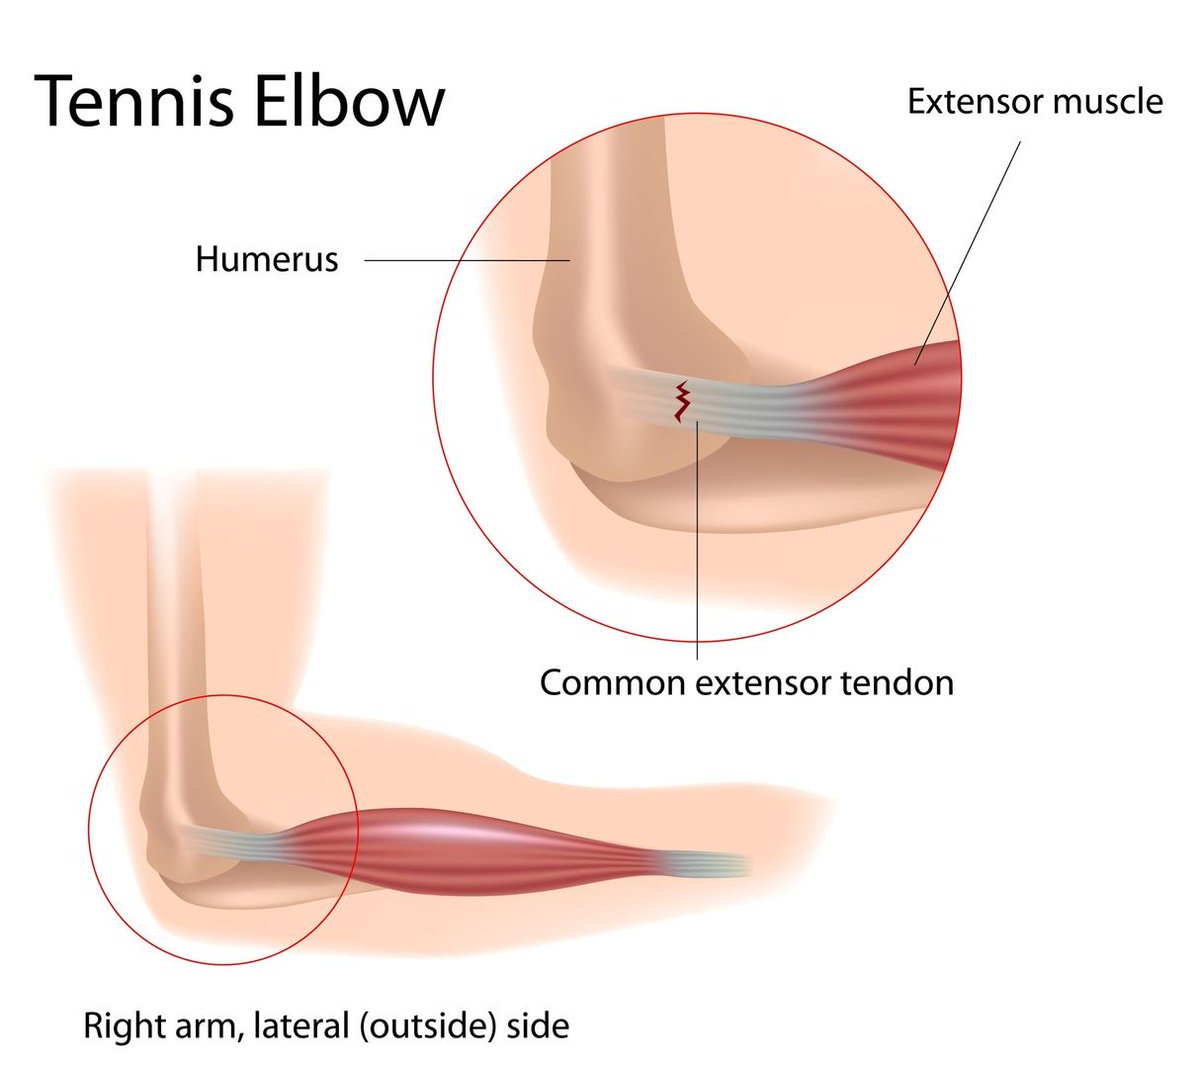 Tennis Elbow - Definition, Anatomy and Causes - Jeffrey H. Berg, M.D. bit.ly/3cZh74J #TennisElbow #LateralEpicondylitis #ElbowPain